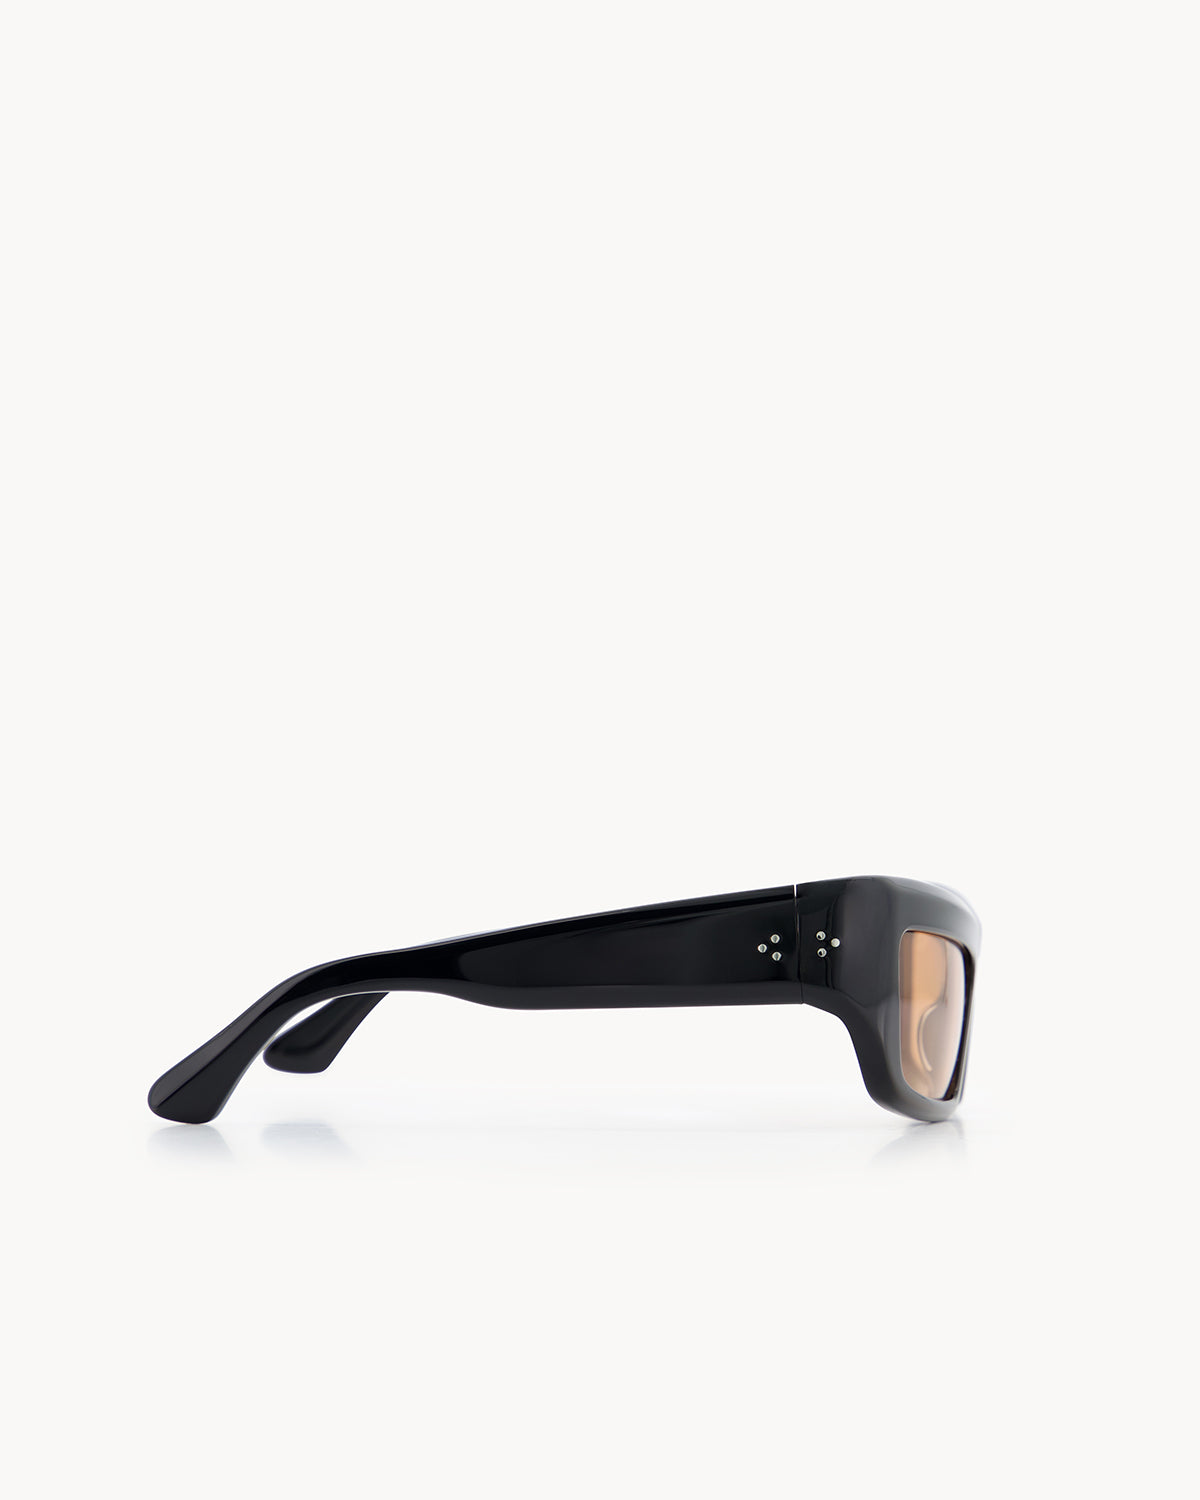 Port Tanger Niyyah Sunglasses in Black Acetate and Amber Lenses 4